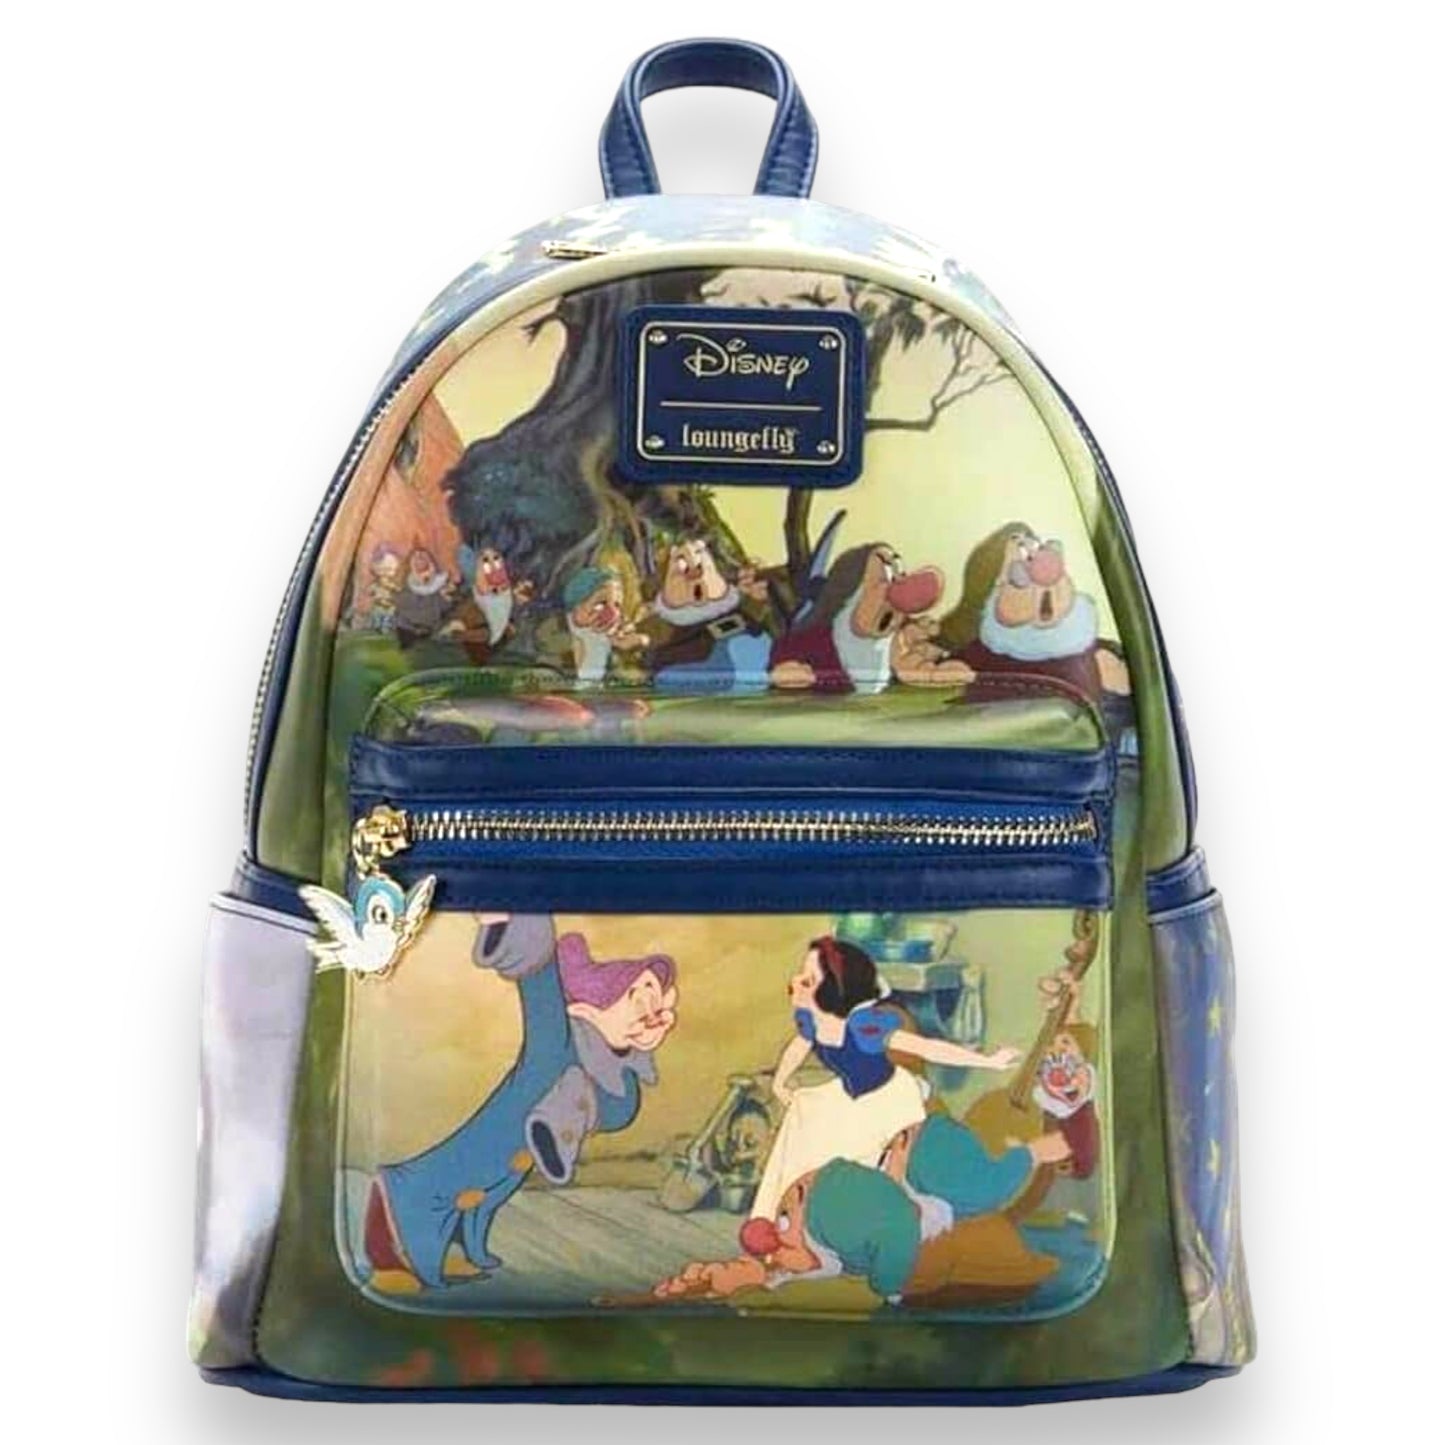 Snow White Film Scenes Mini Backpack